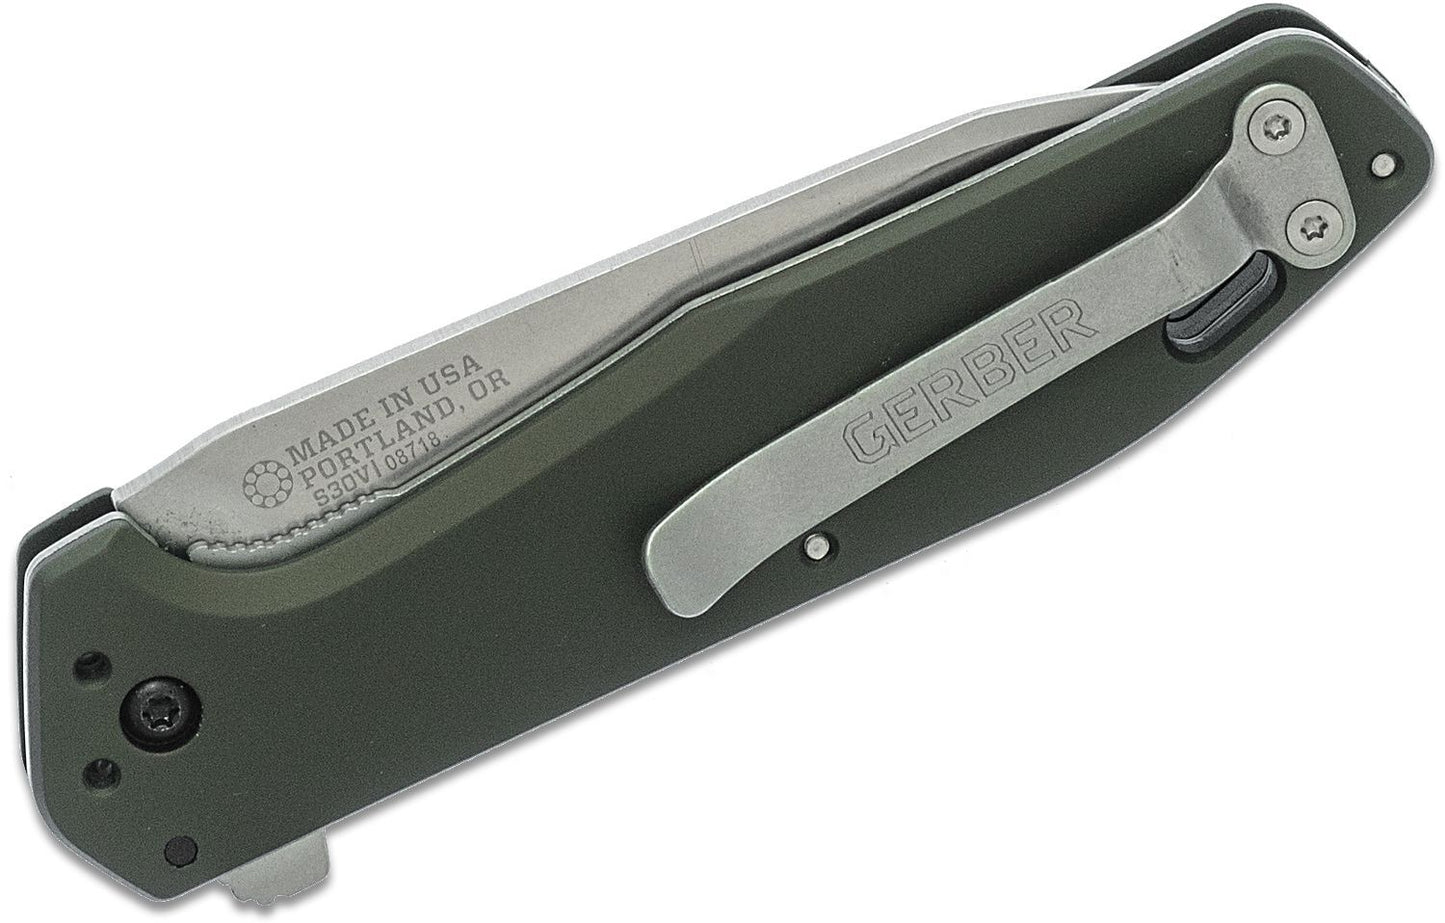 Gerber Gerber Fastball Folding Knife Green Aluminum Handles - 3 Inch S30V Stonewashed Wharncliffe Blade #30-001610 Dark Slate Gray